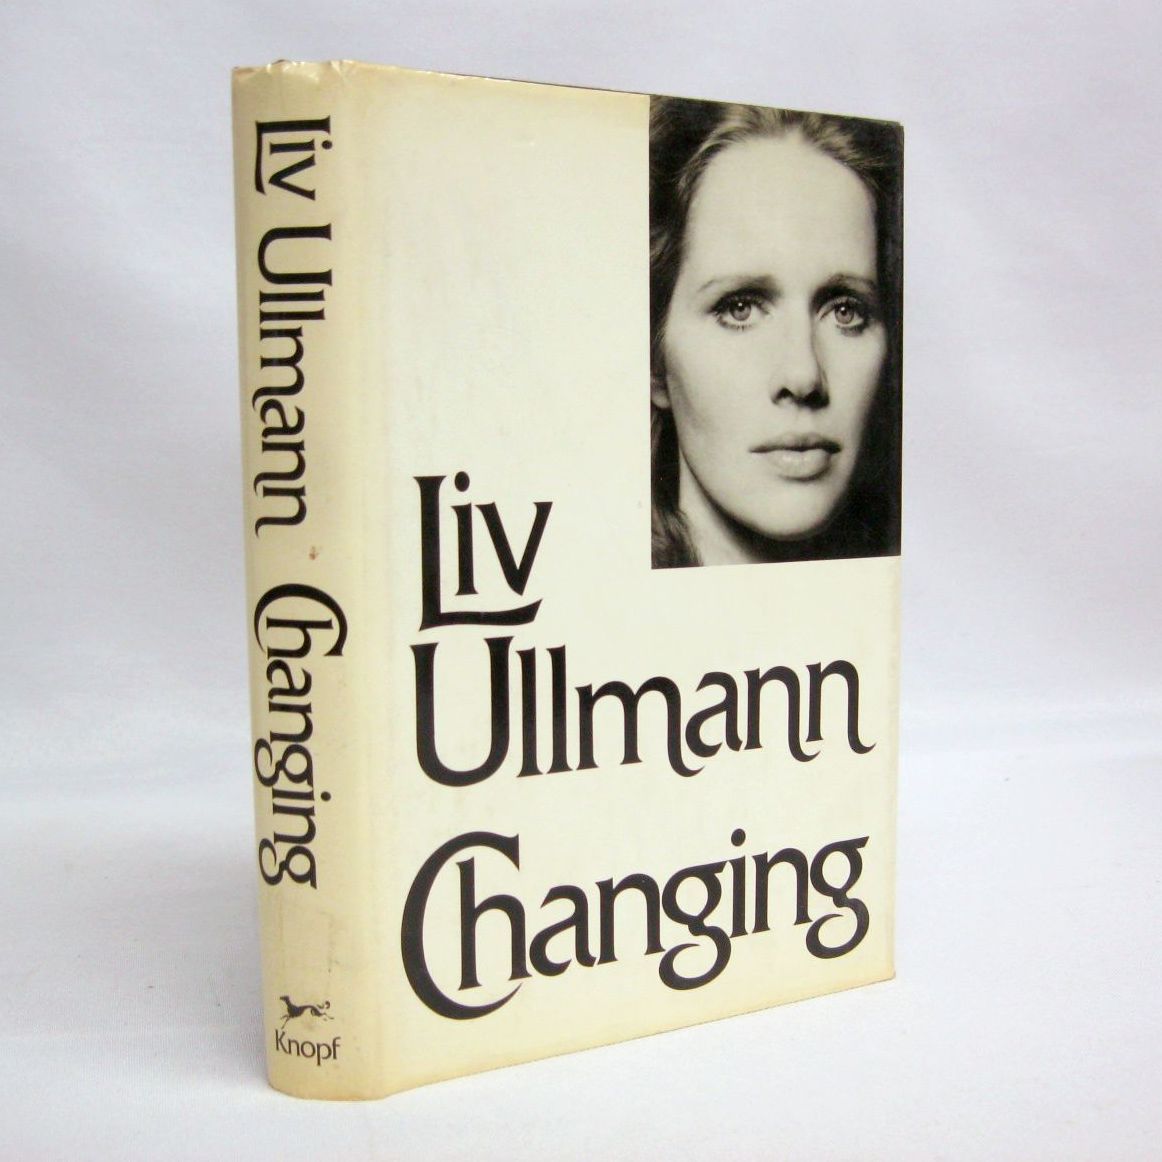 Changing by Liv Ullmann